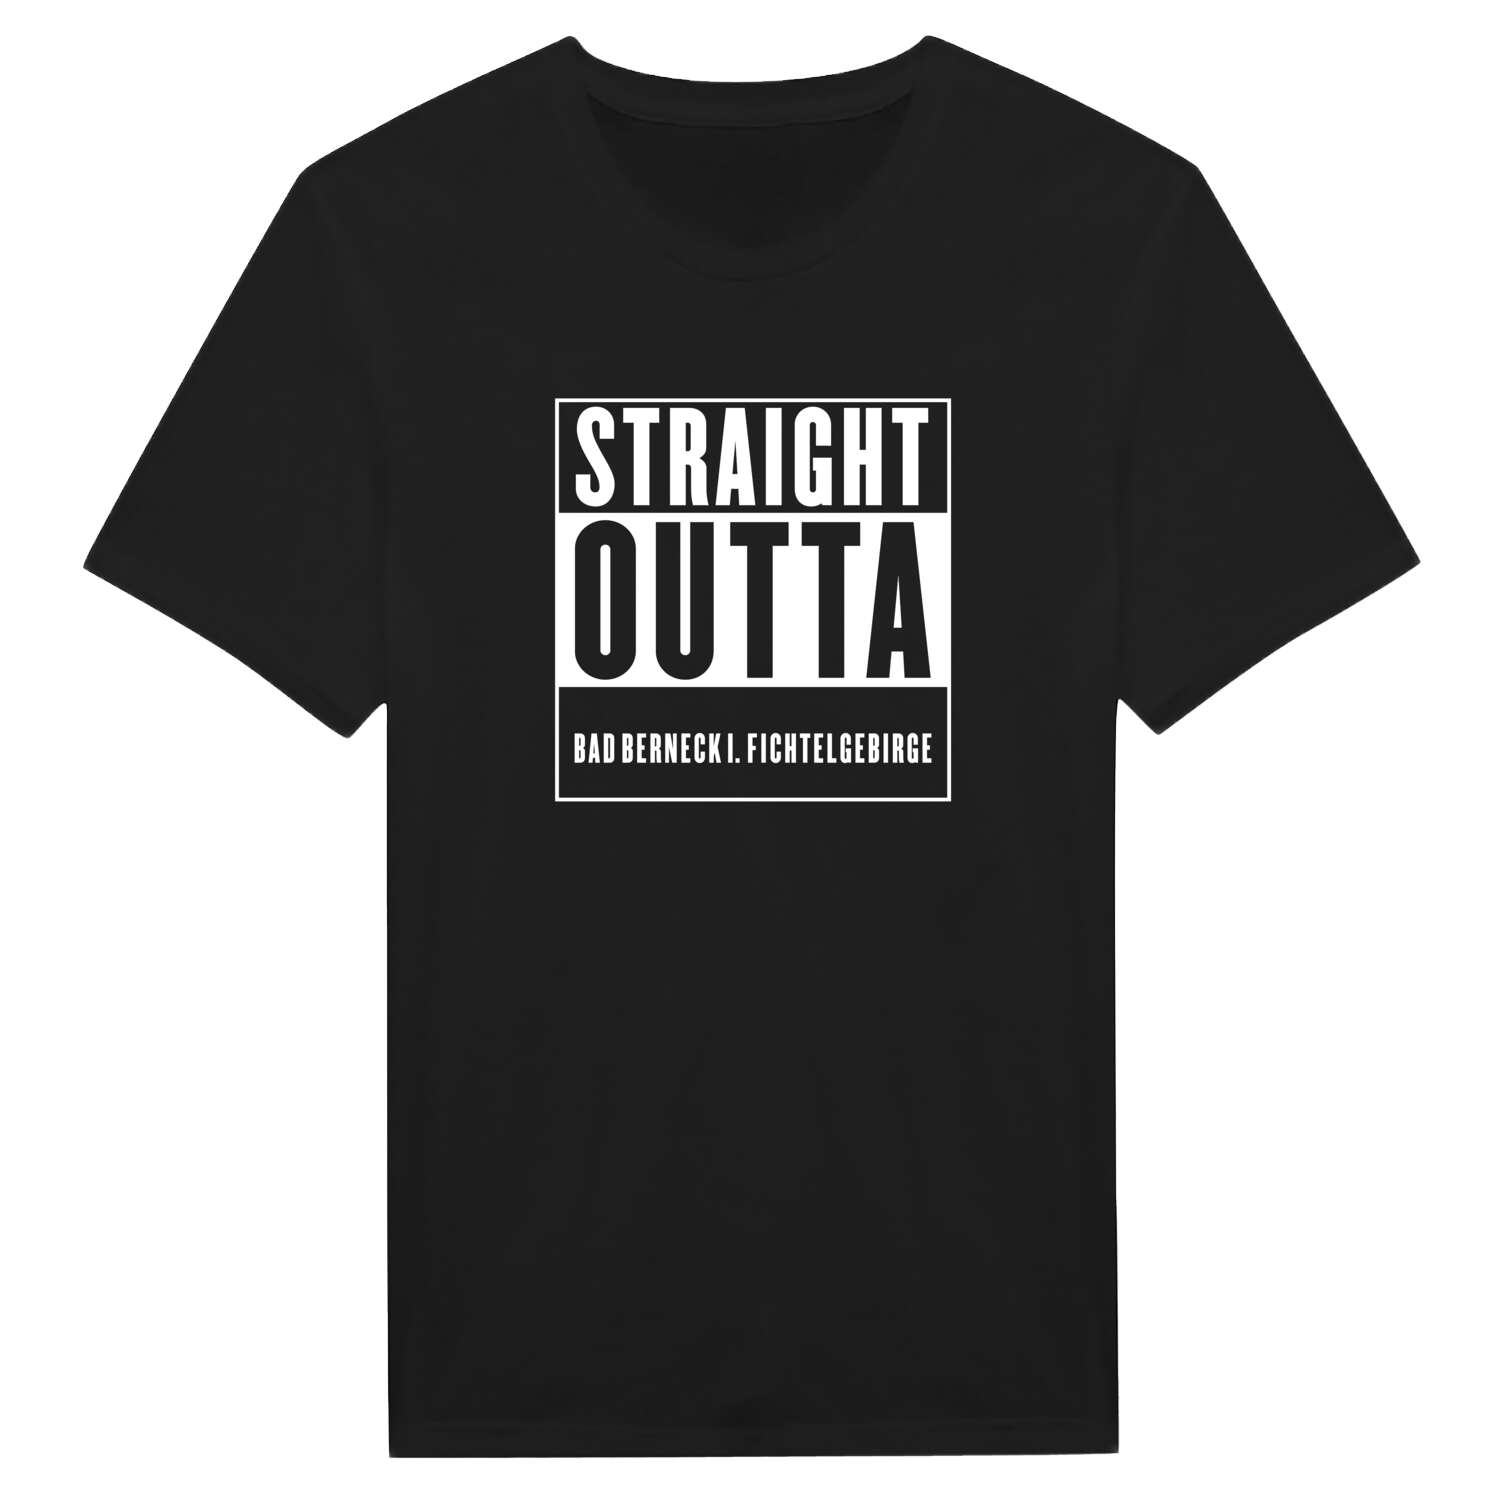 Bad Berneck i. Fichtelgebirge T-Shirt »Straight Outta«